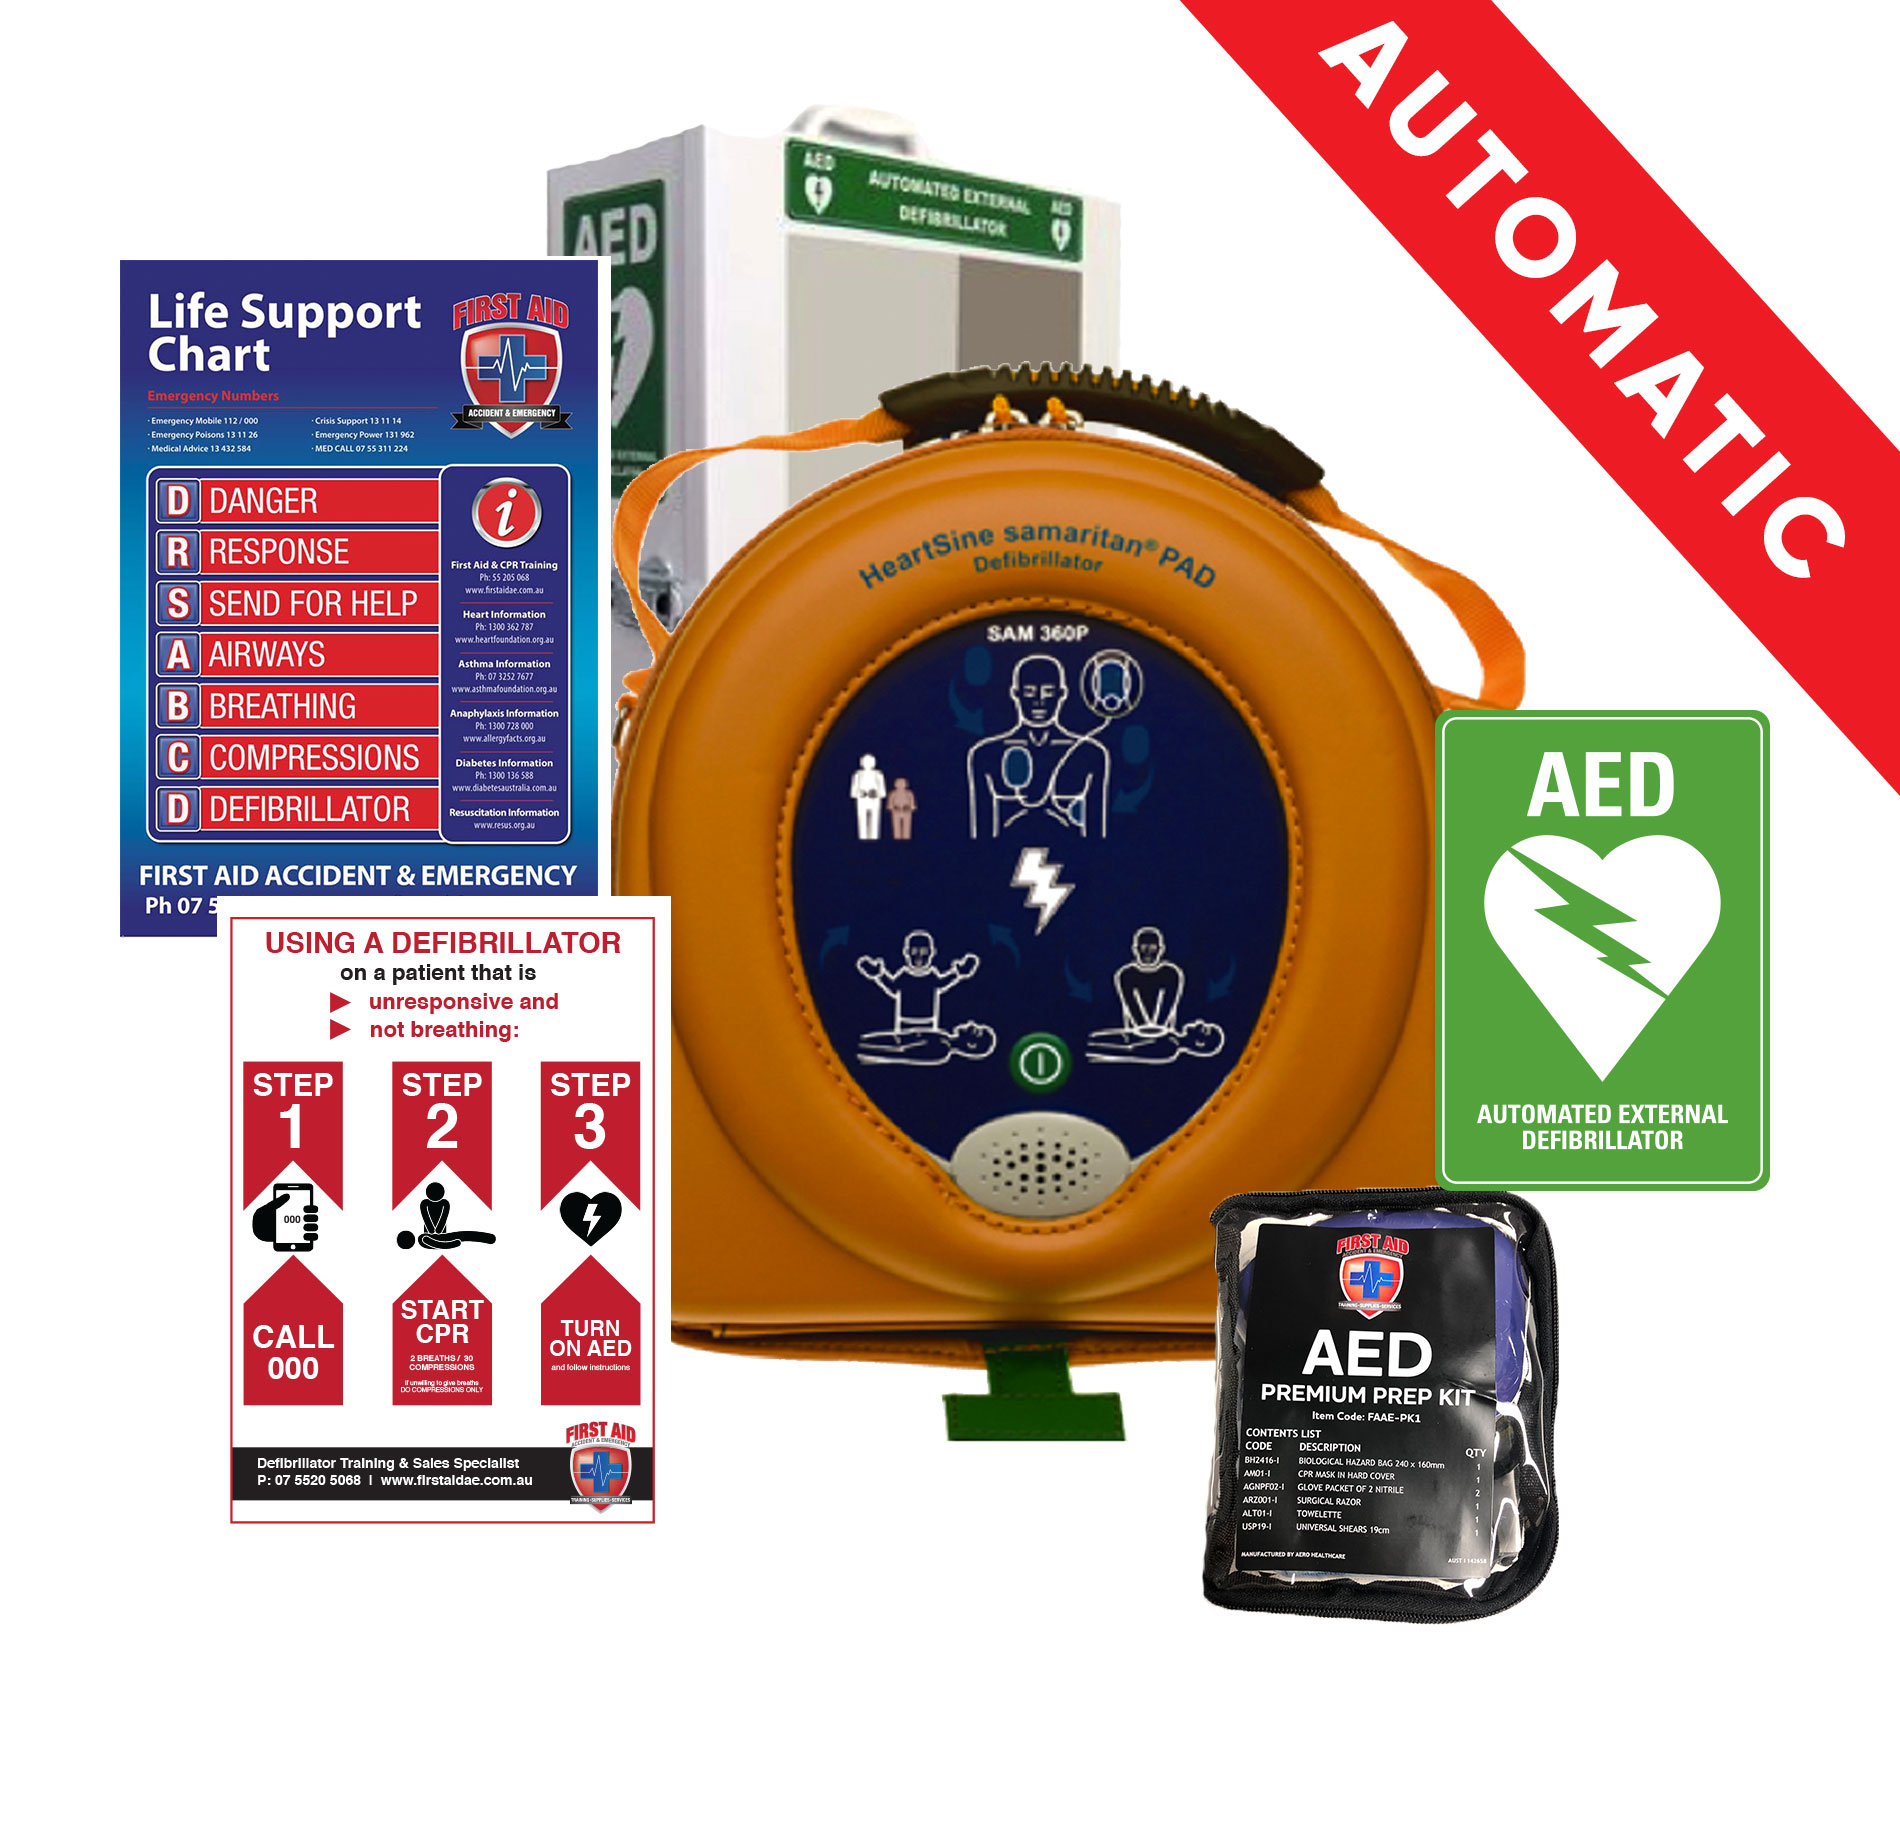 HeartSine Samaritian PAD 360P Automated External Defibrillator pack